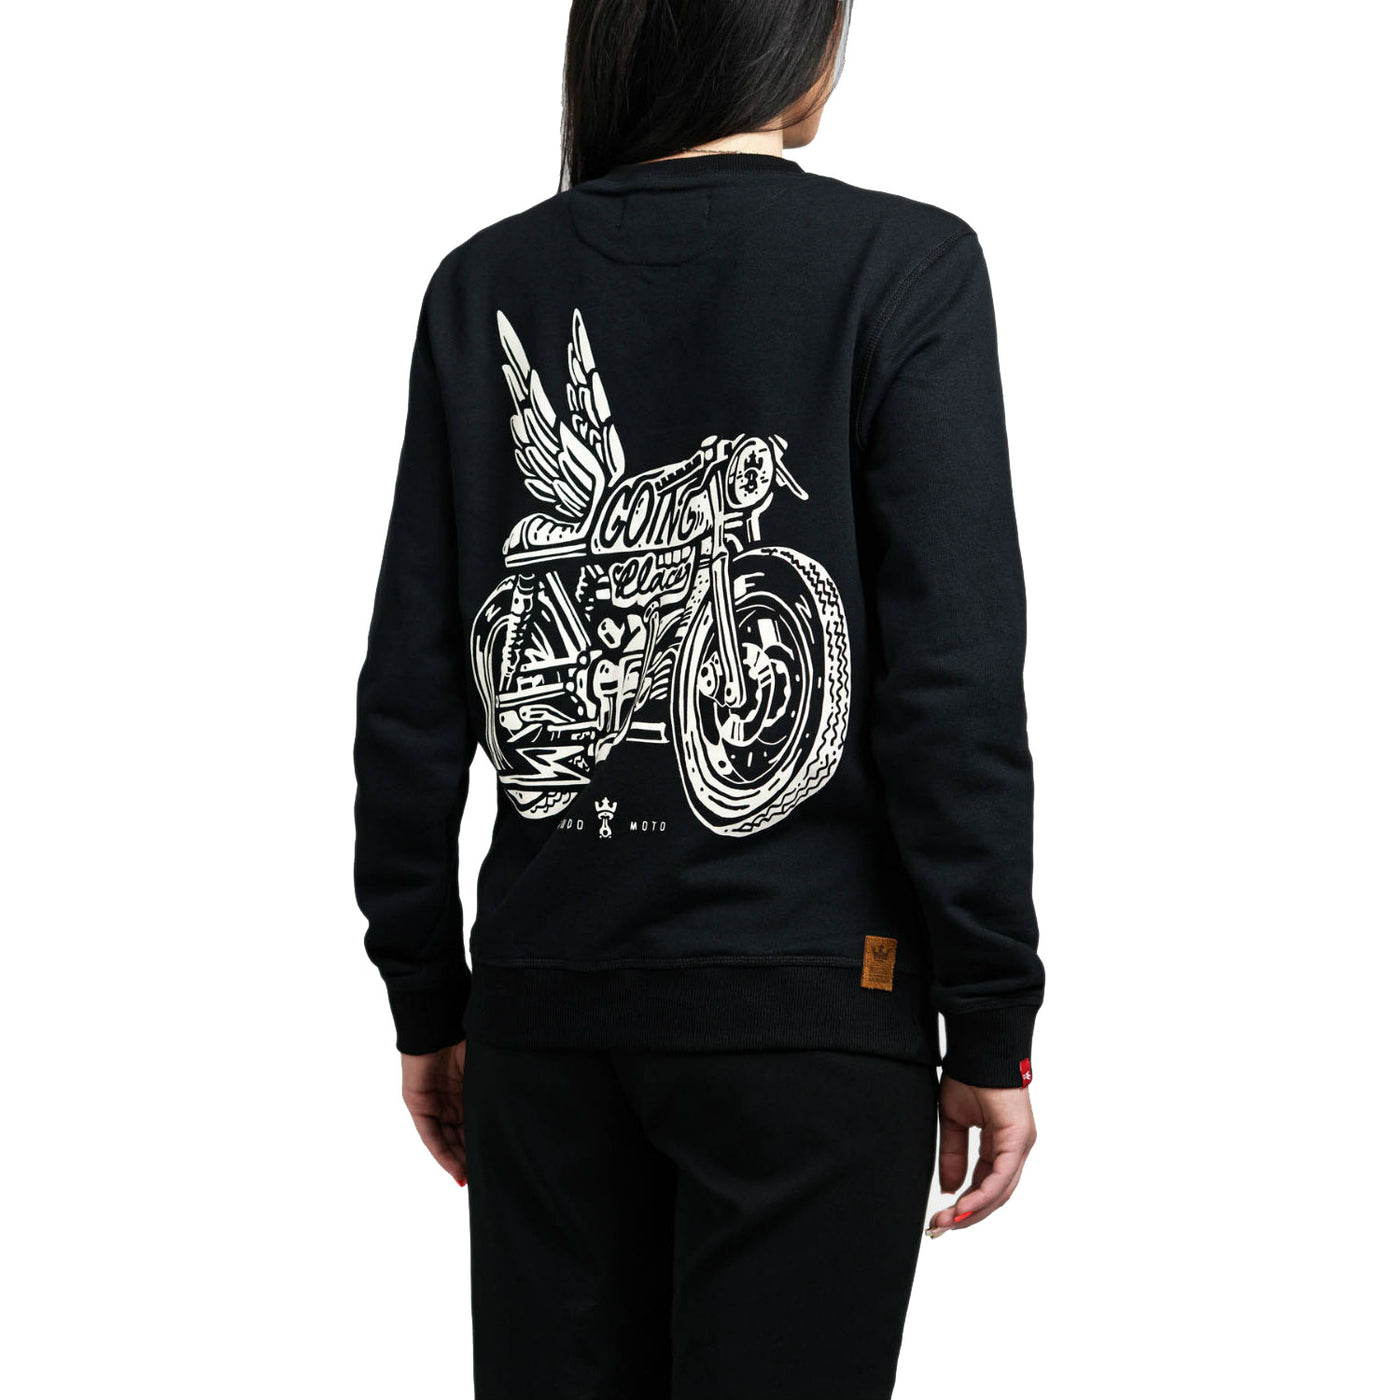 Unisex Biker Sweatshirt - Black Cotton, JOHN WING 01